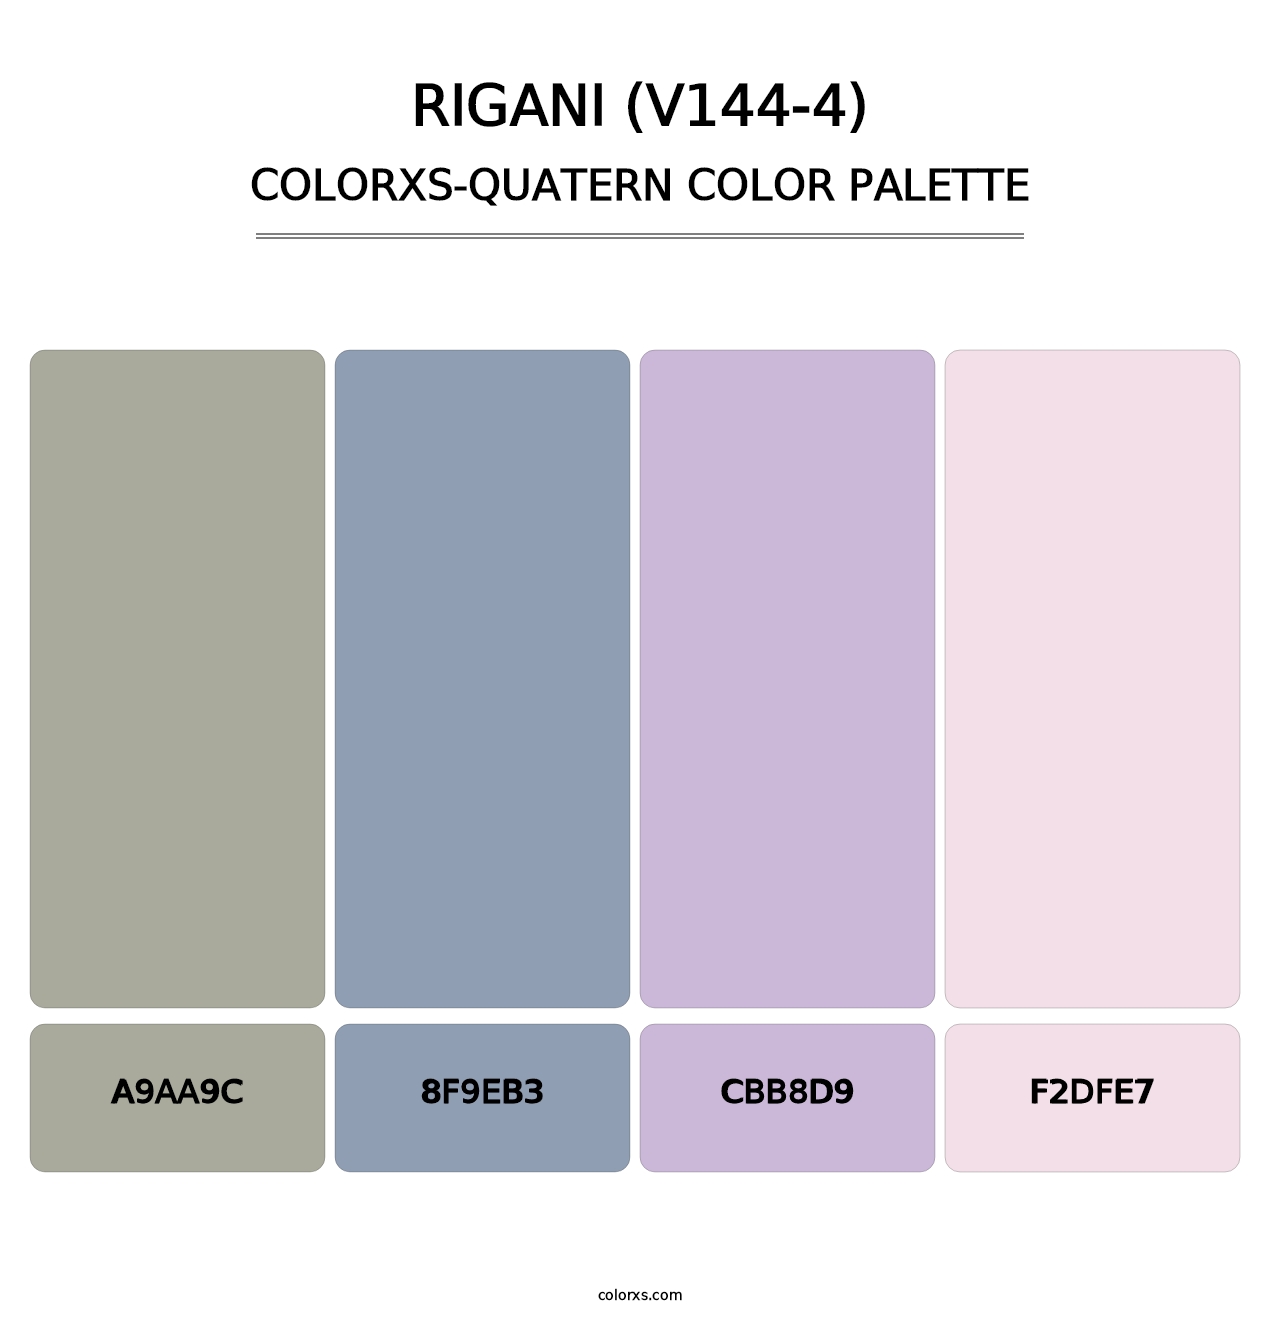 Rigani (V144-4) - Colorxs Quatern Palette